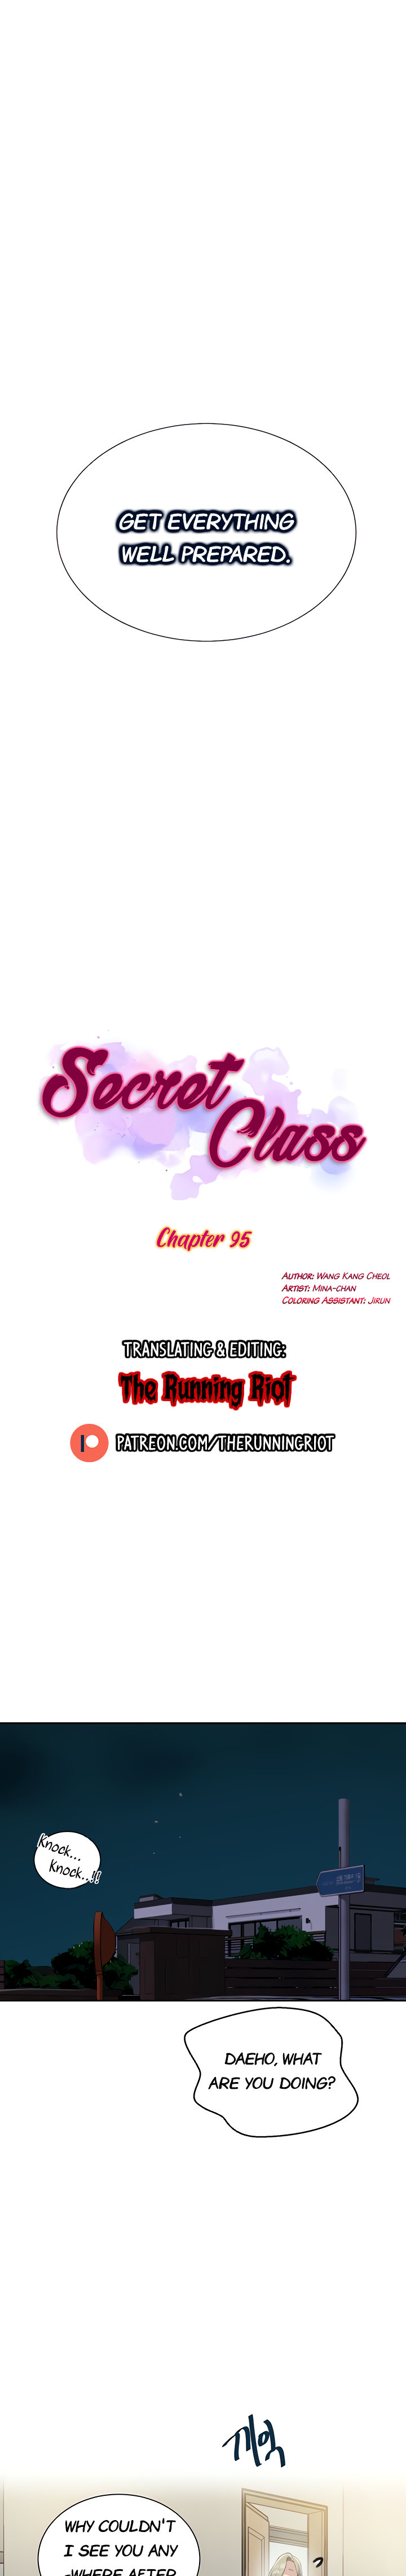 Secret Class - Chapter 95 Page 2